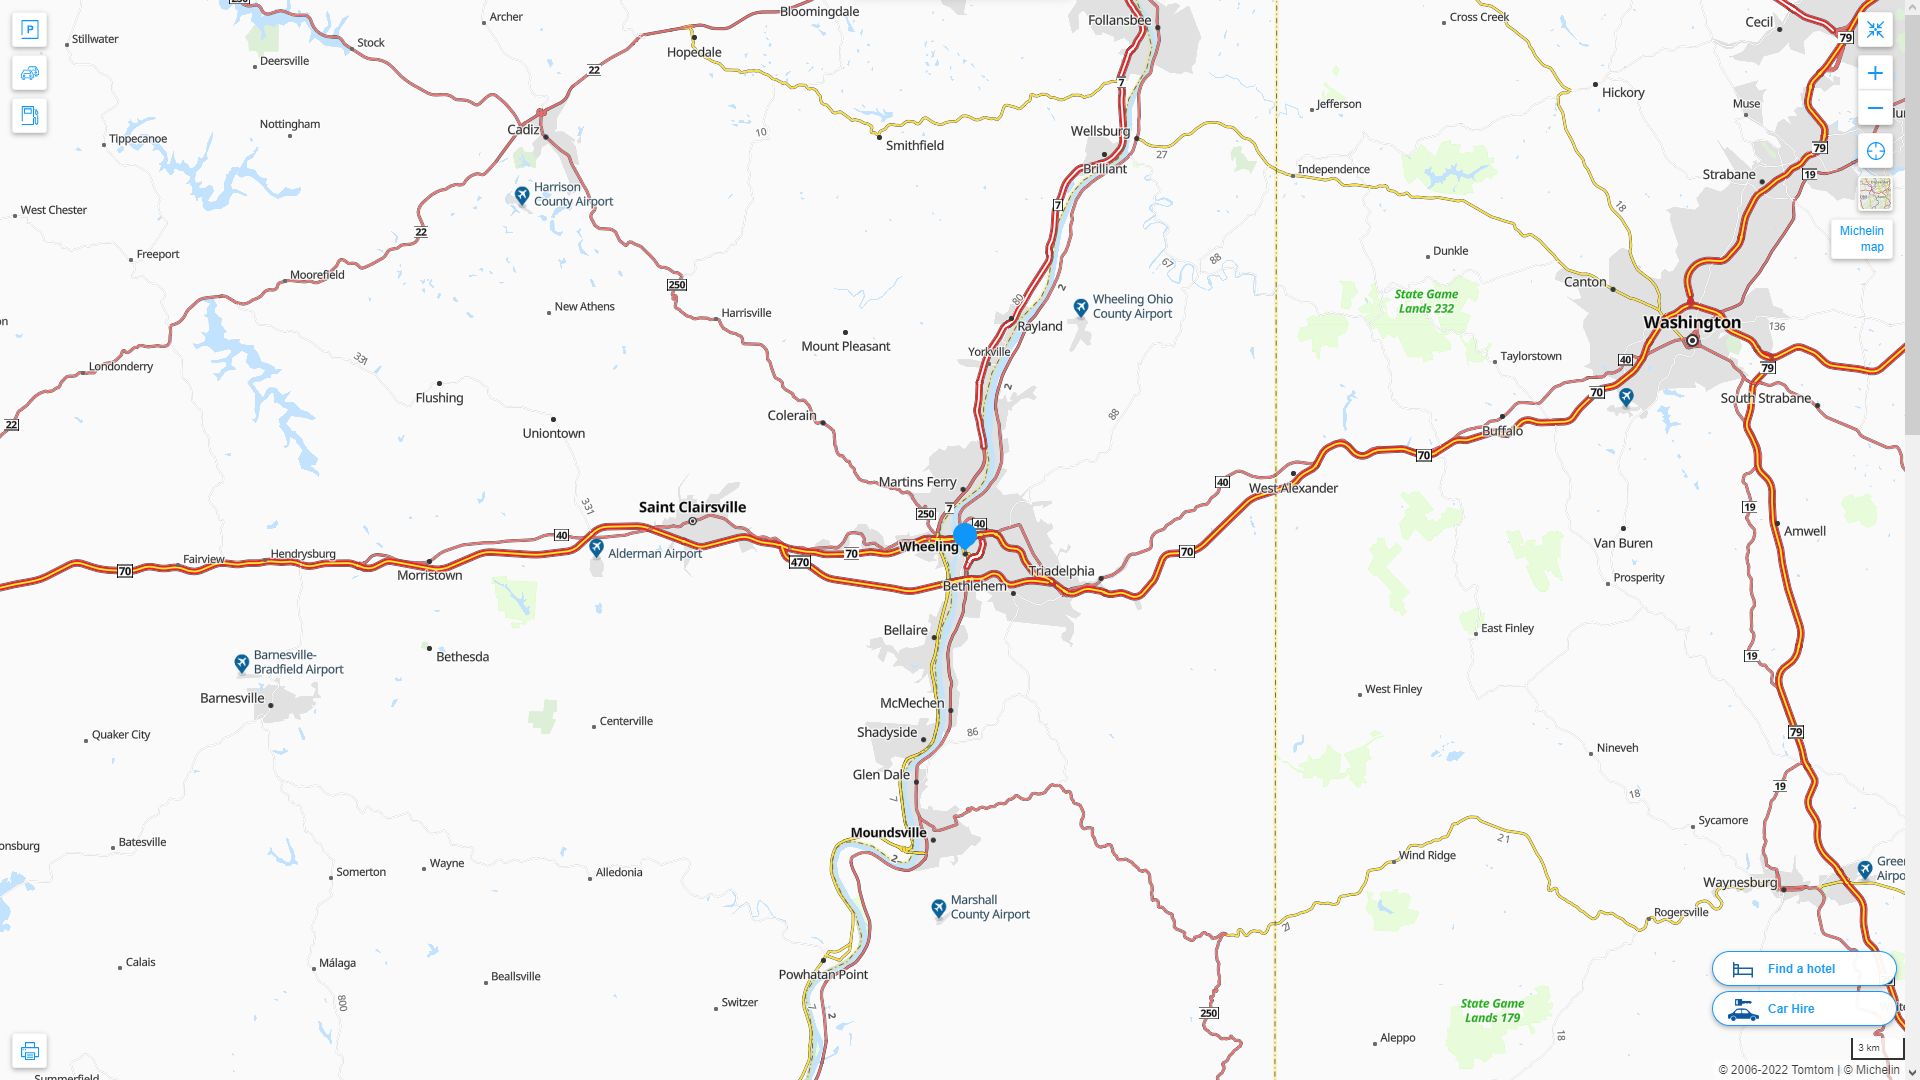 Wheeling West Virginia Highway and Road Map